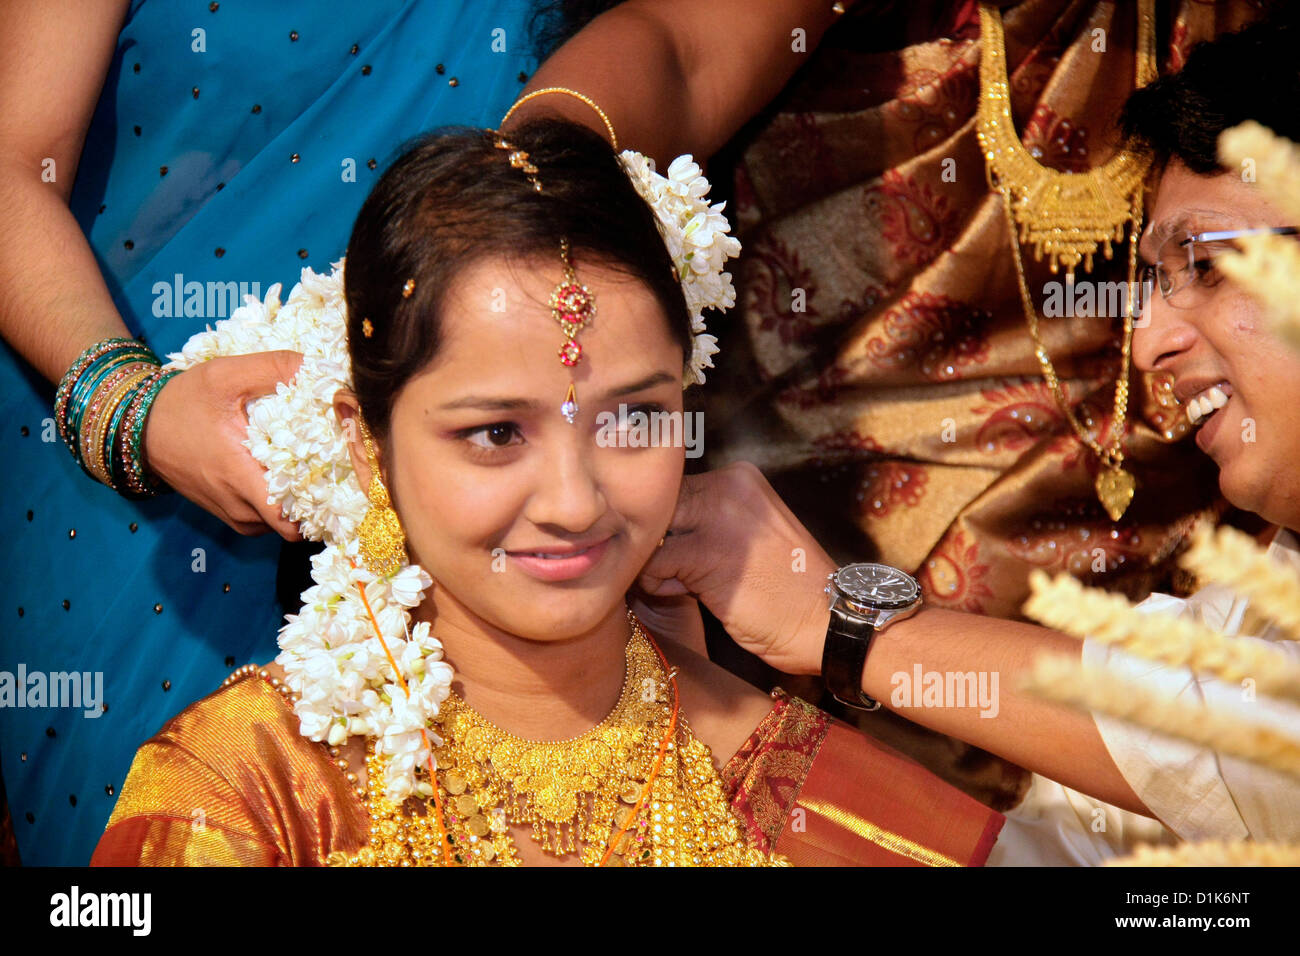 tahlikettu ceremony from a traditional indian hindu wedding or kerala hindu wedding,kerala,south india,india,asia Stock Photo